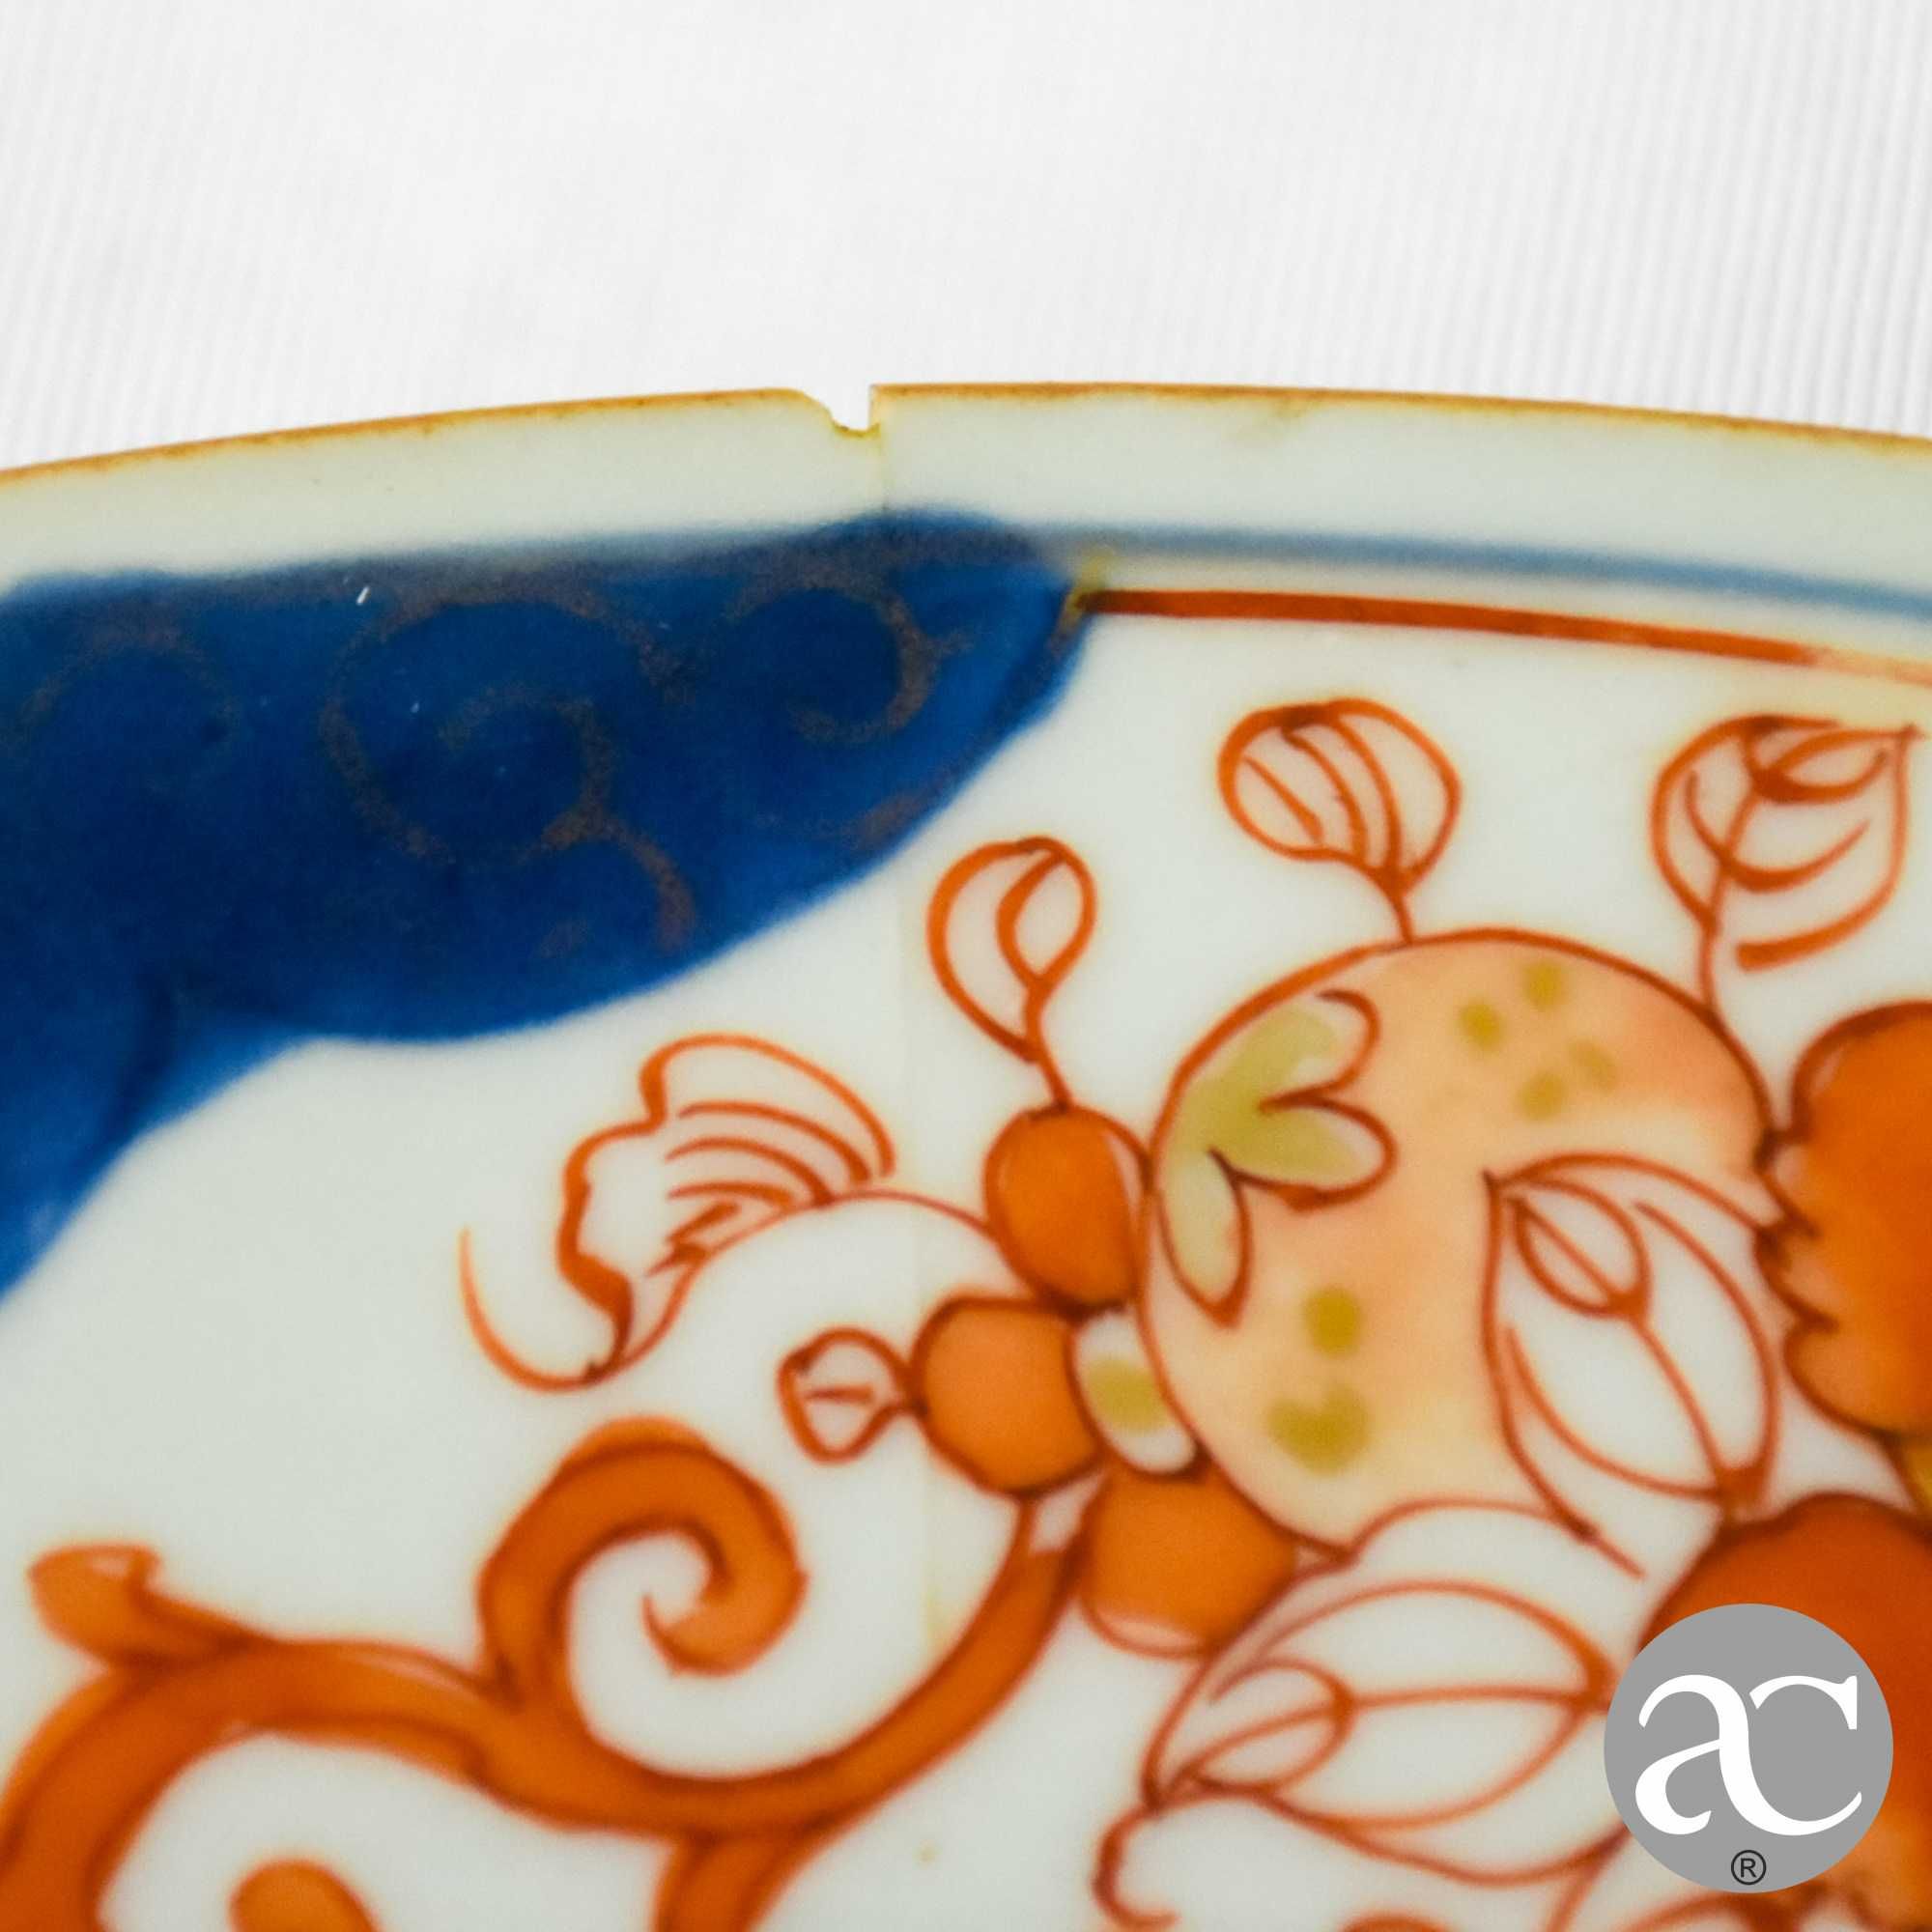 Prato Porcelana da China, Imari, Período Kangxi, séc. XVII / XVIII